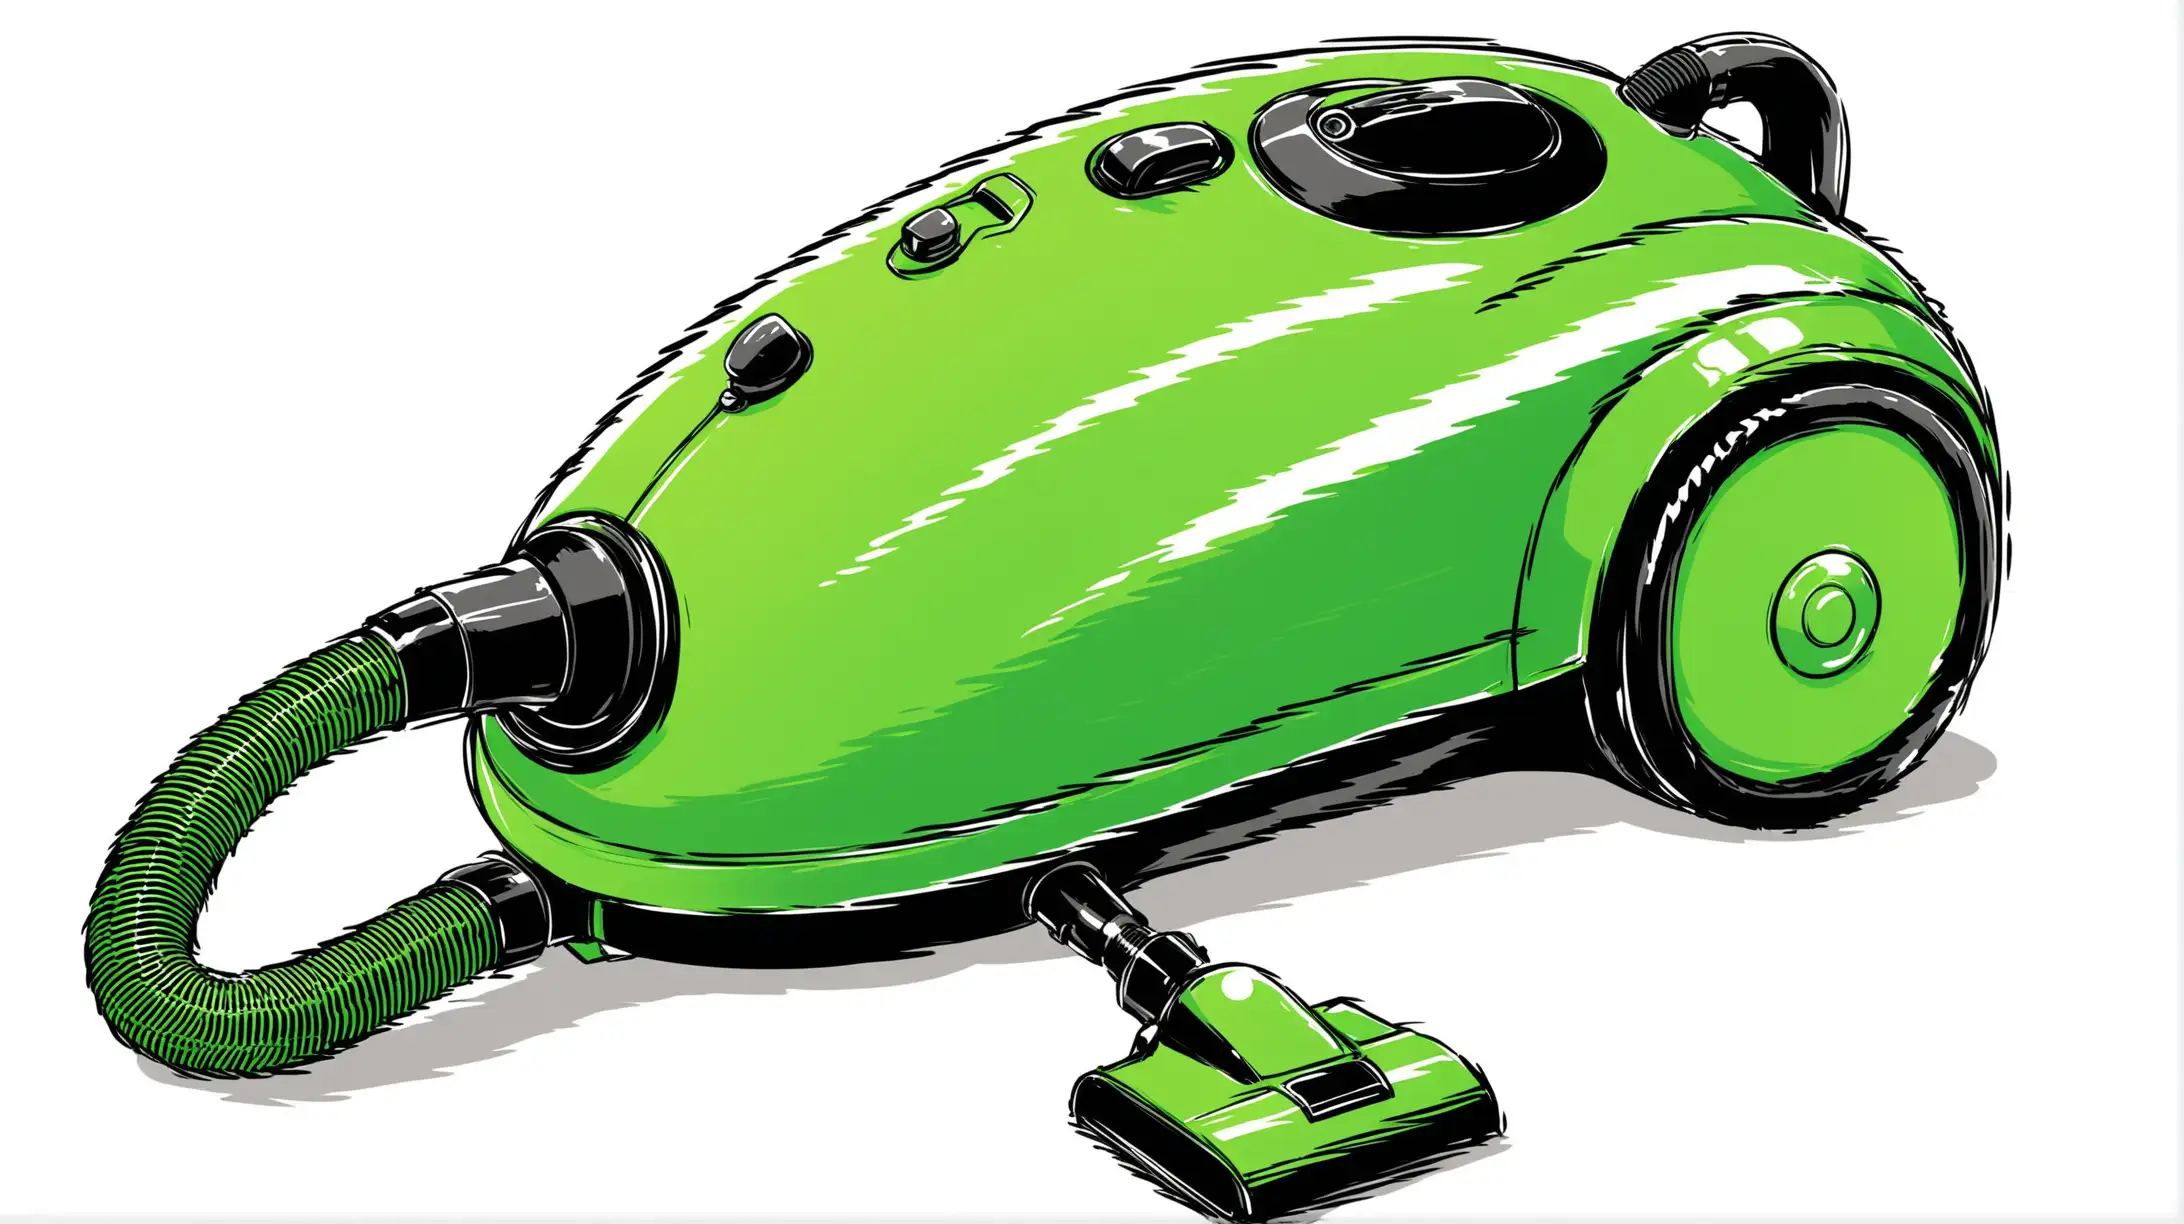 Green Vacuum Cleaner Illustration on White Background